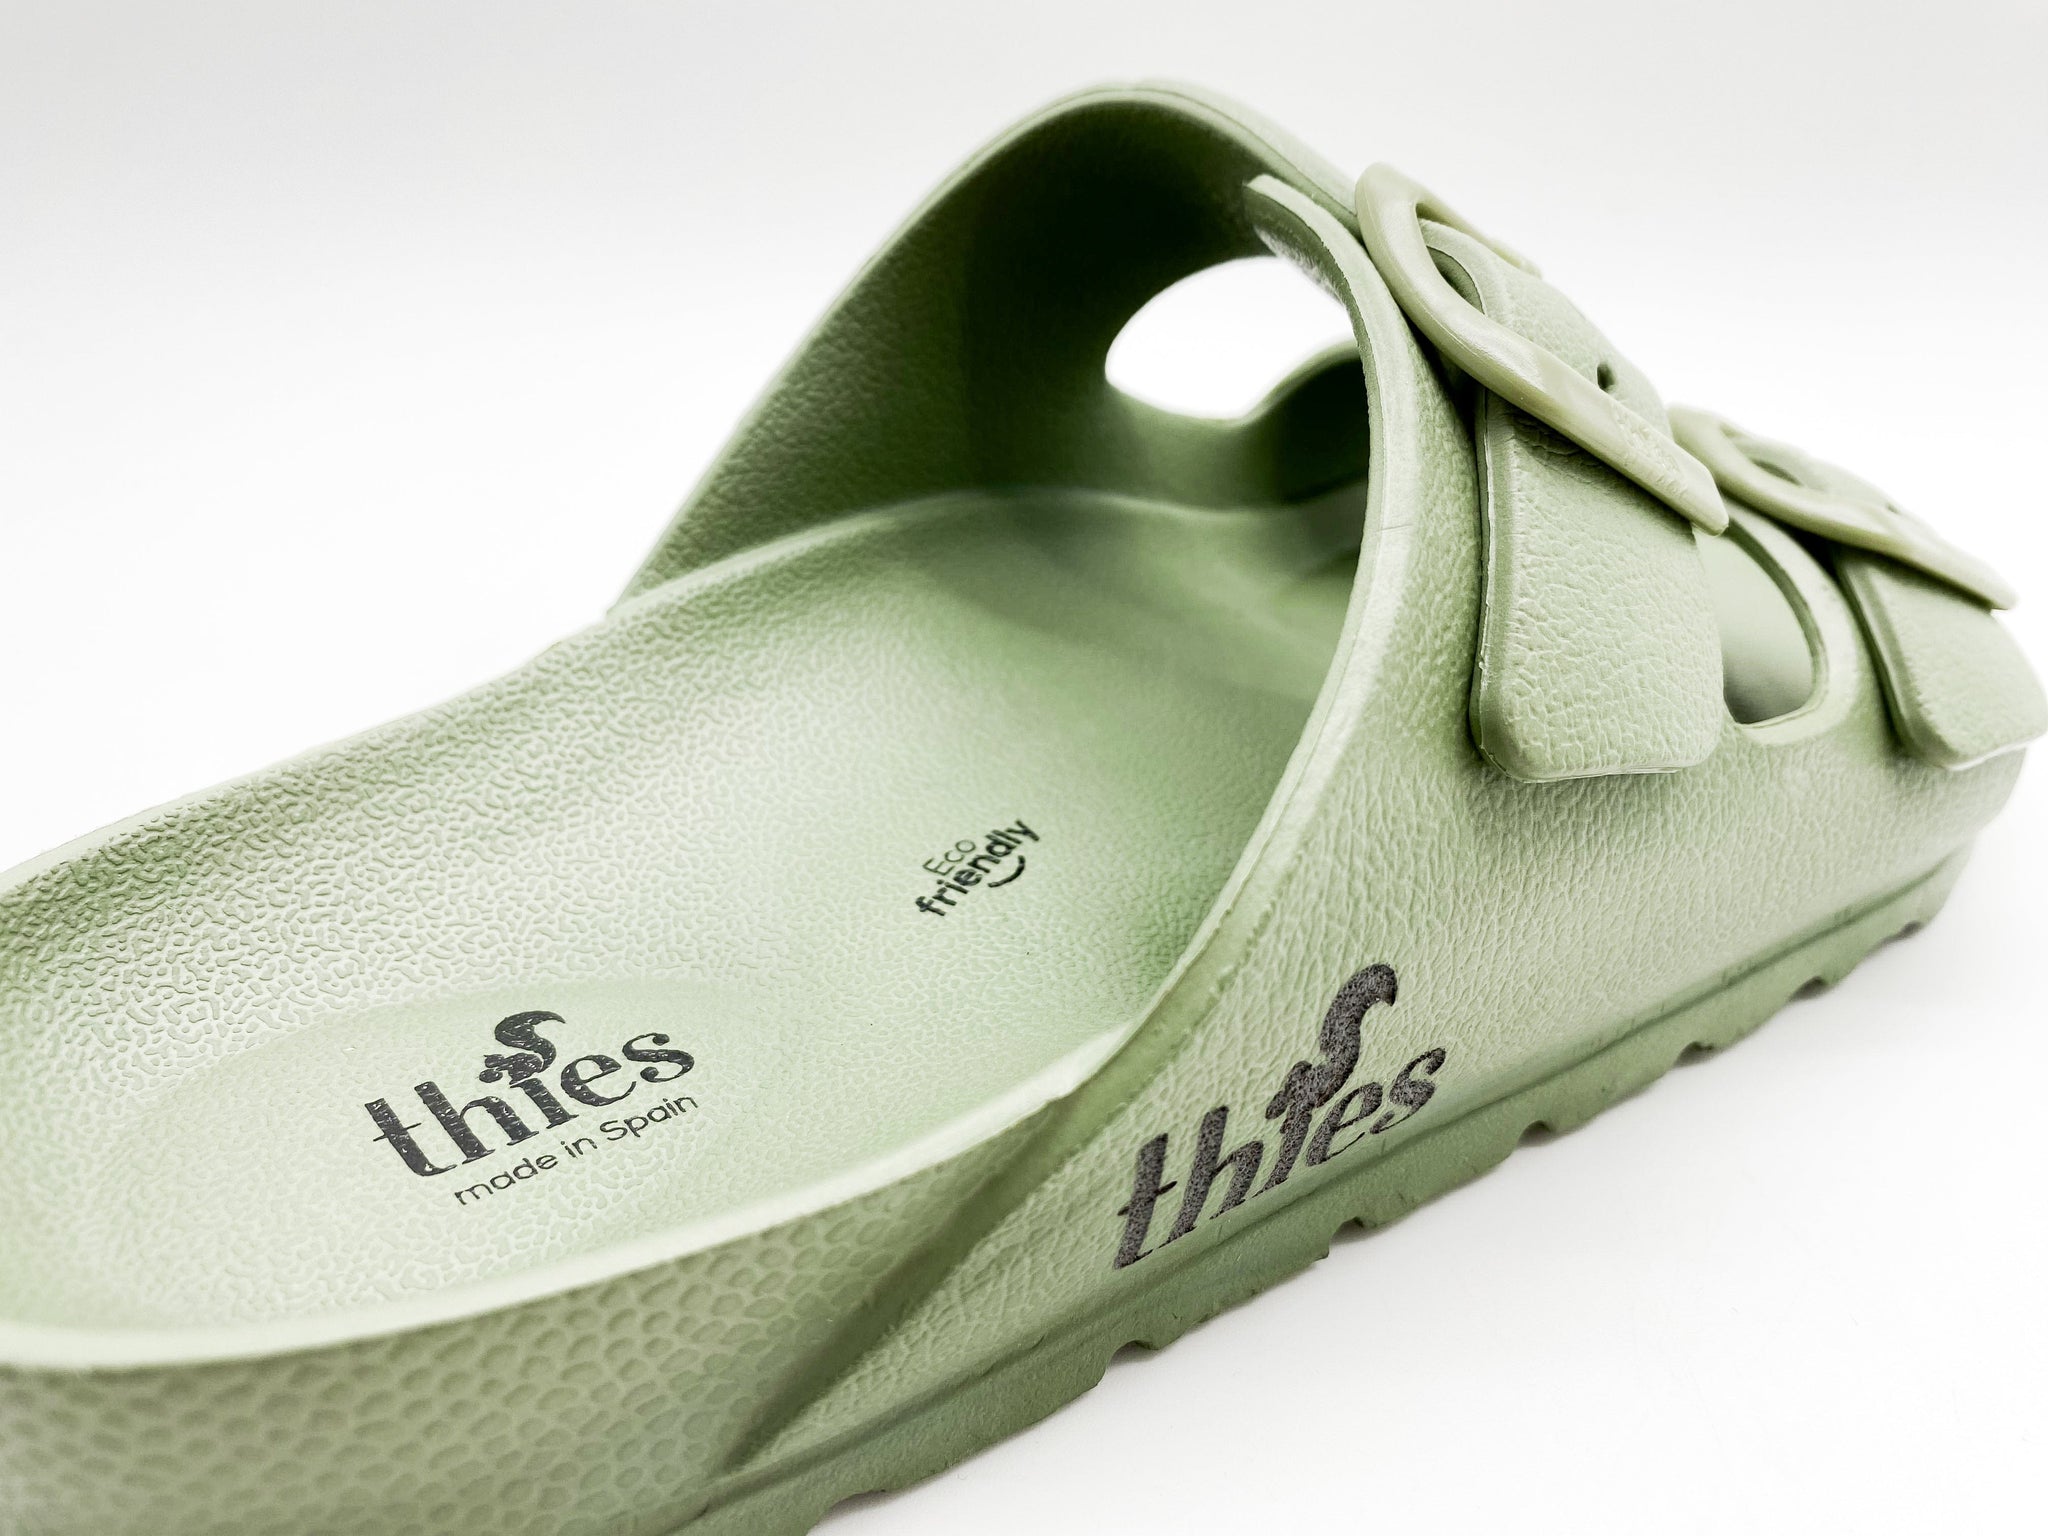 NAT 2 calzado thies 1856 ® Ecofoam Sandal kaki moda sostenible moda ética